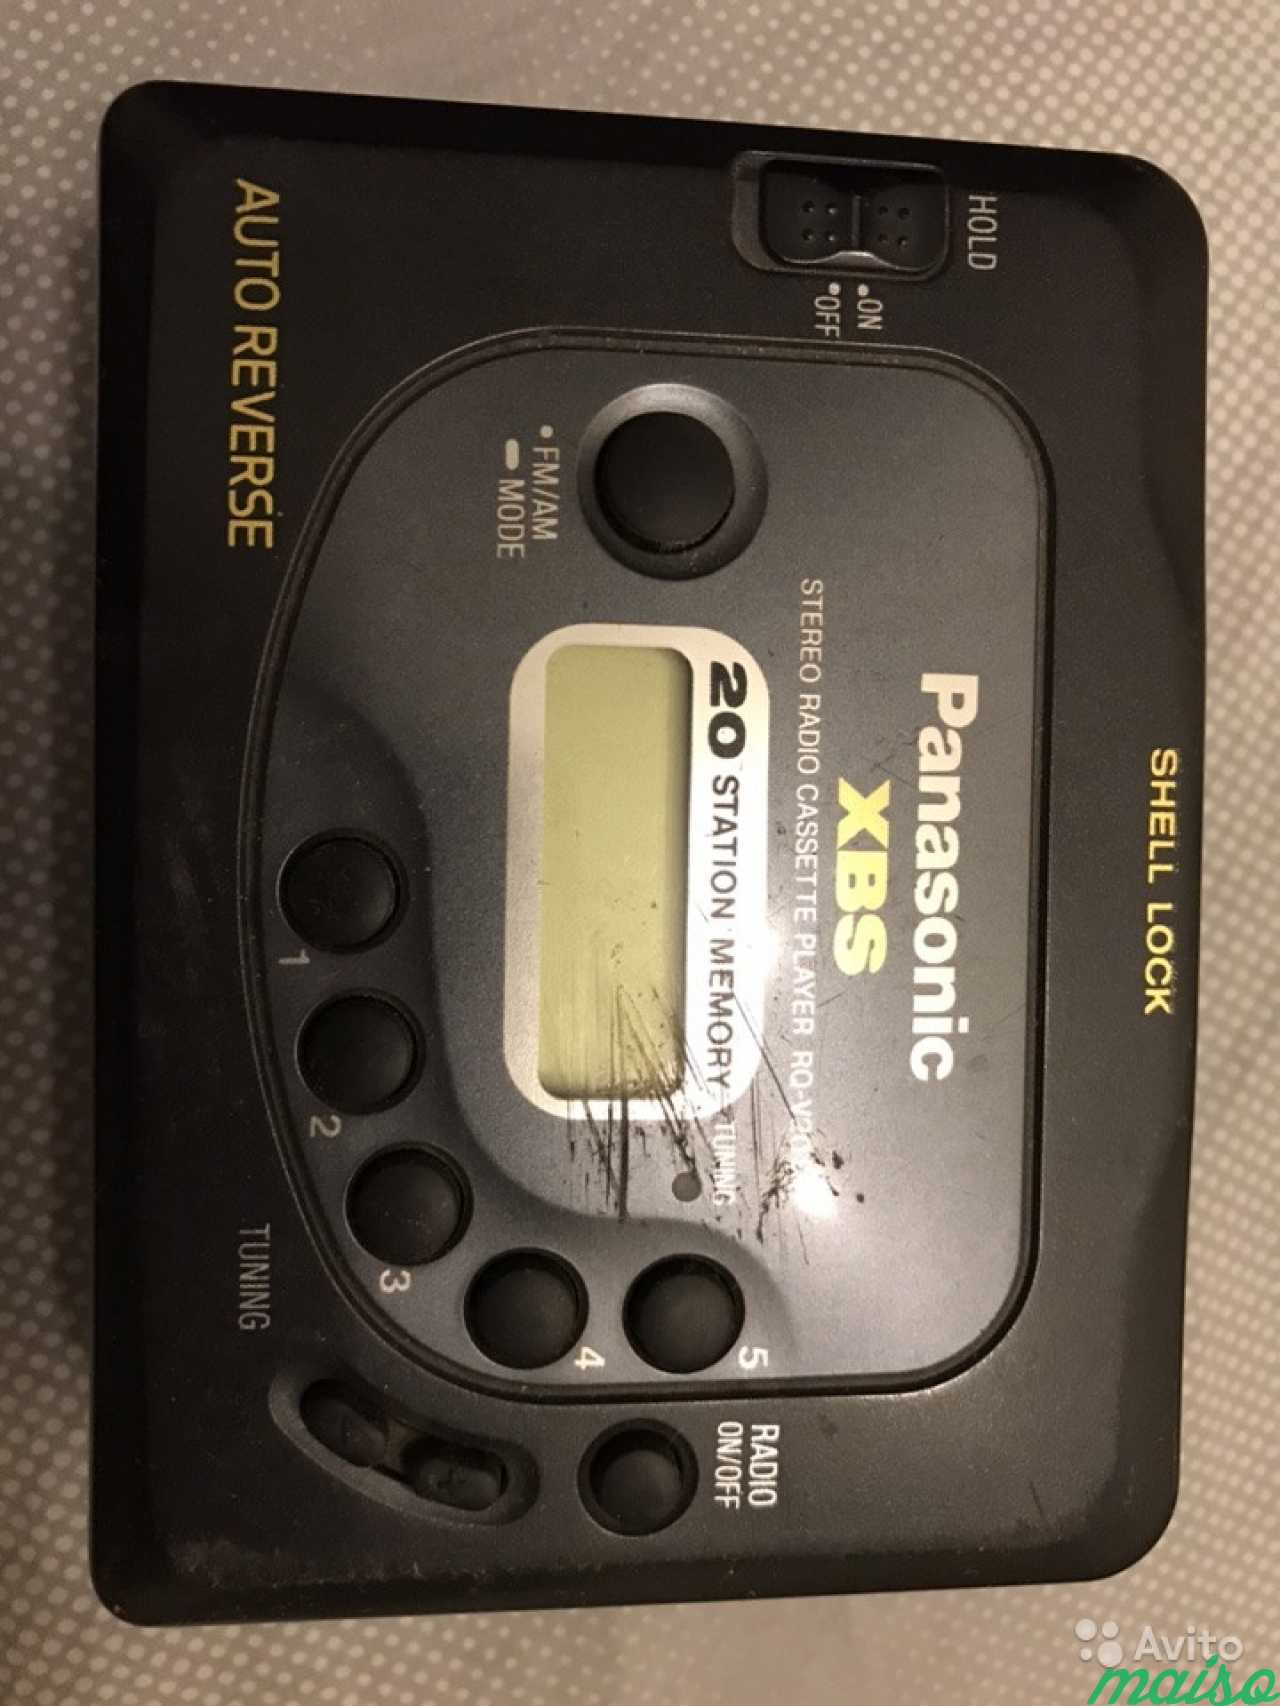 Кассета панасоник. Аудио кассетный плеер (Panasonic RQ-cw05). Кассетный плеер Panasonic 203. Кассетный плеер Panasonic 80s80. Аудио кассетный плеер (Panasonic PQ-cw05).